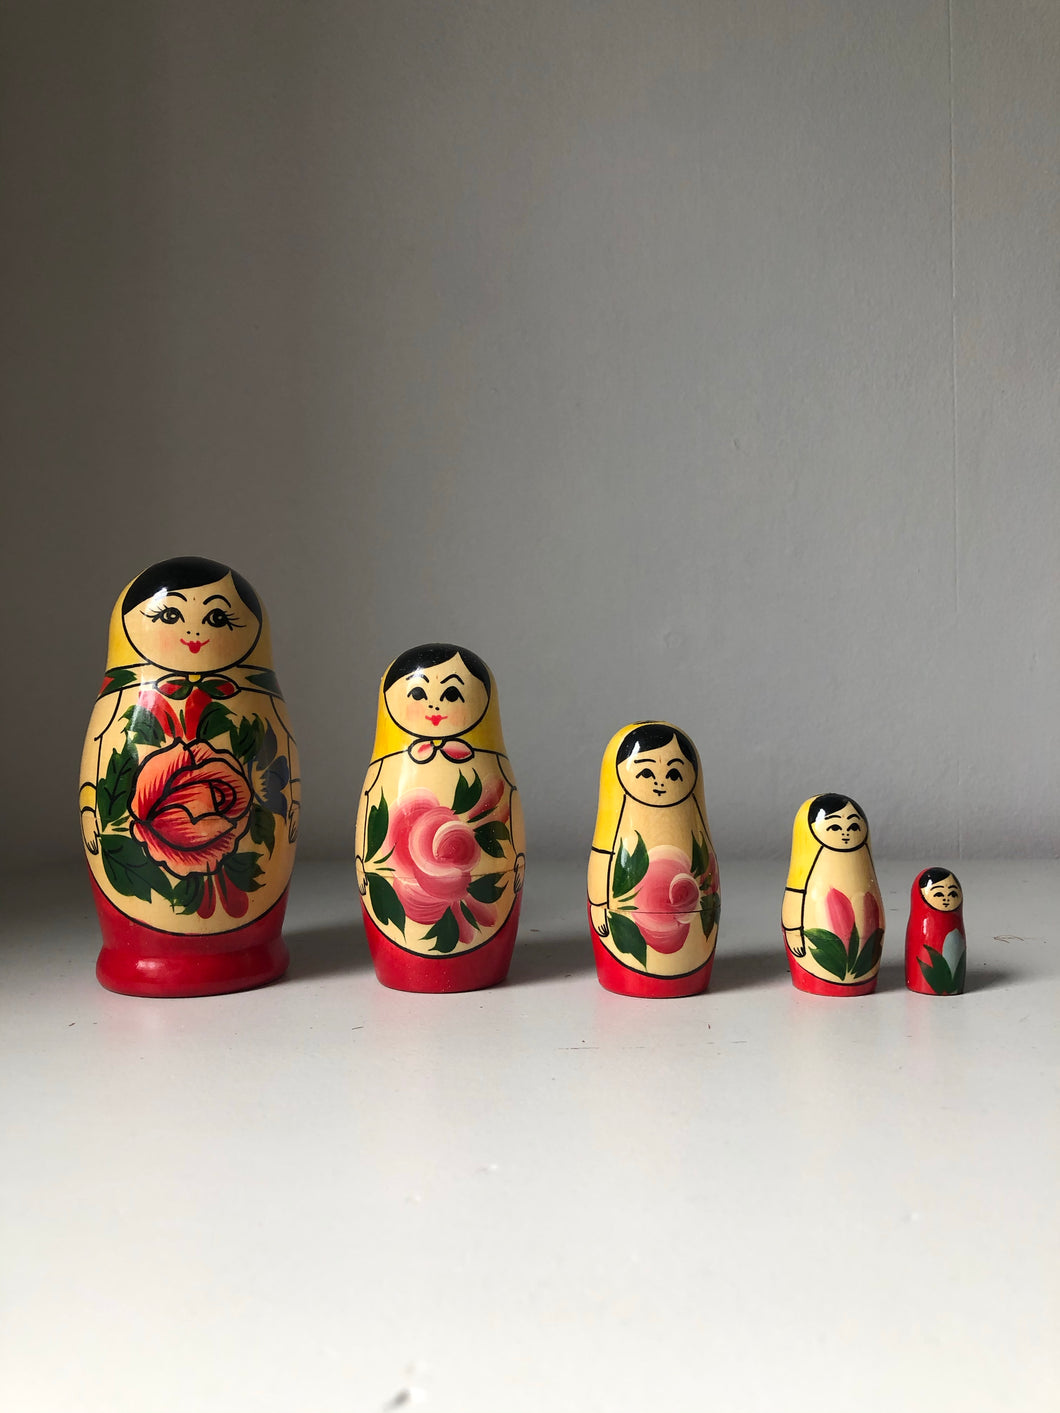 Set of Vintage Russian Dolls